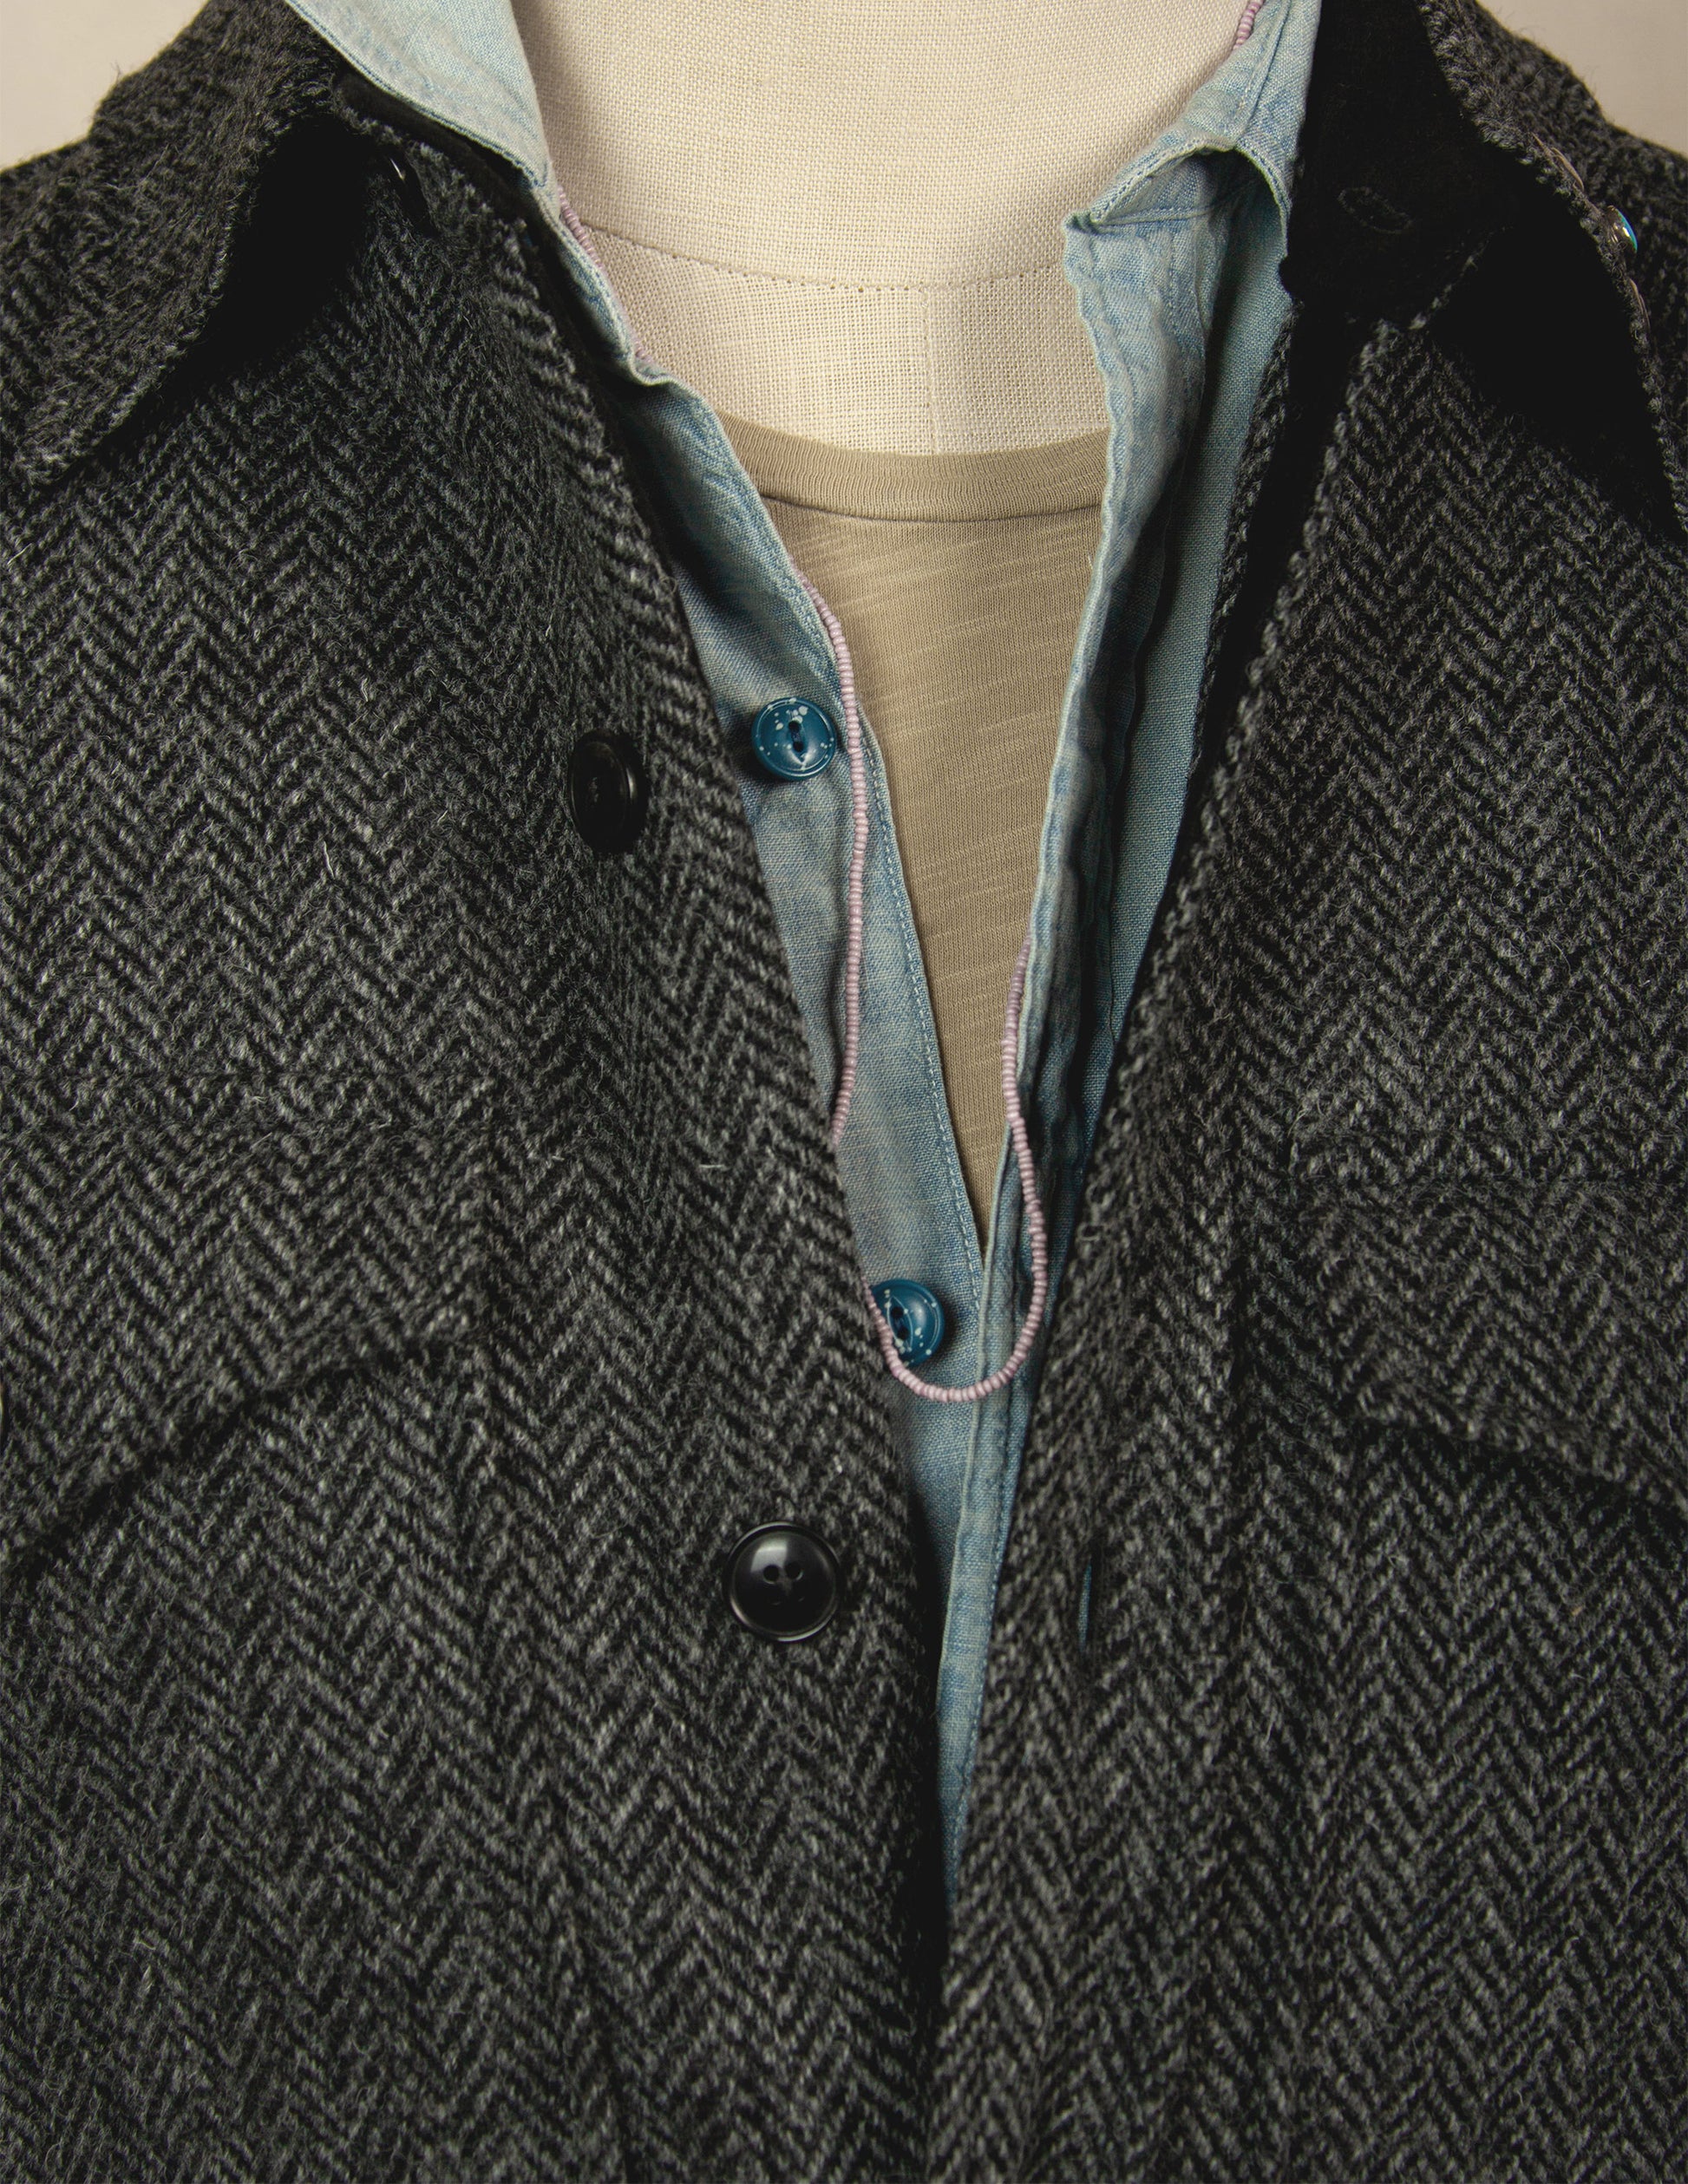 Rivay Harris Tweed Wool CPO Shirt Jacket in Charcoal Herringbone